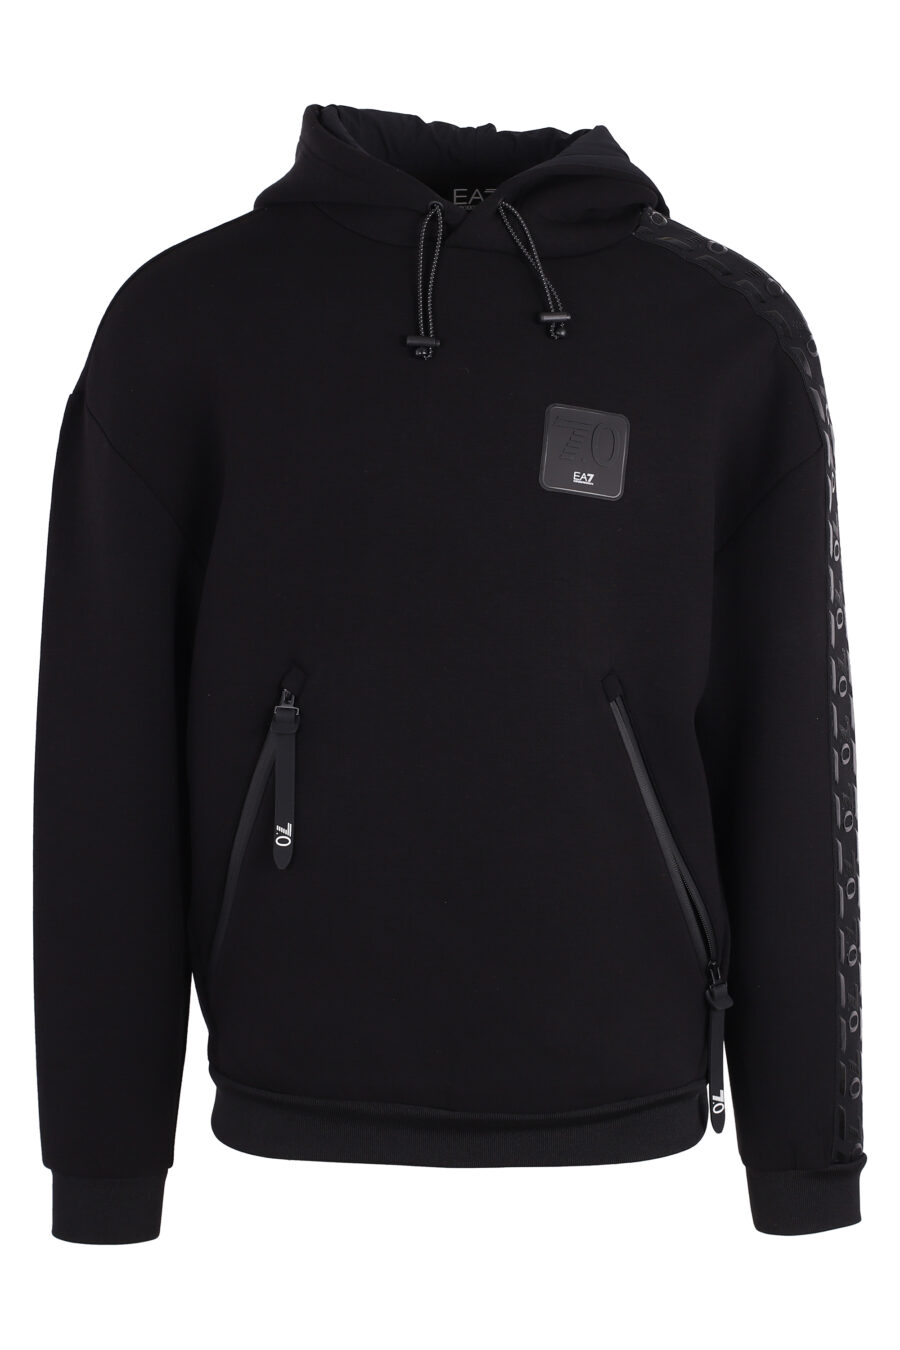 Black hooded sweatshirt with shiny monochrome logo on sleeves - IMG 4749